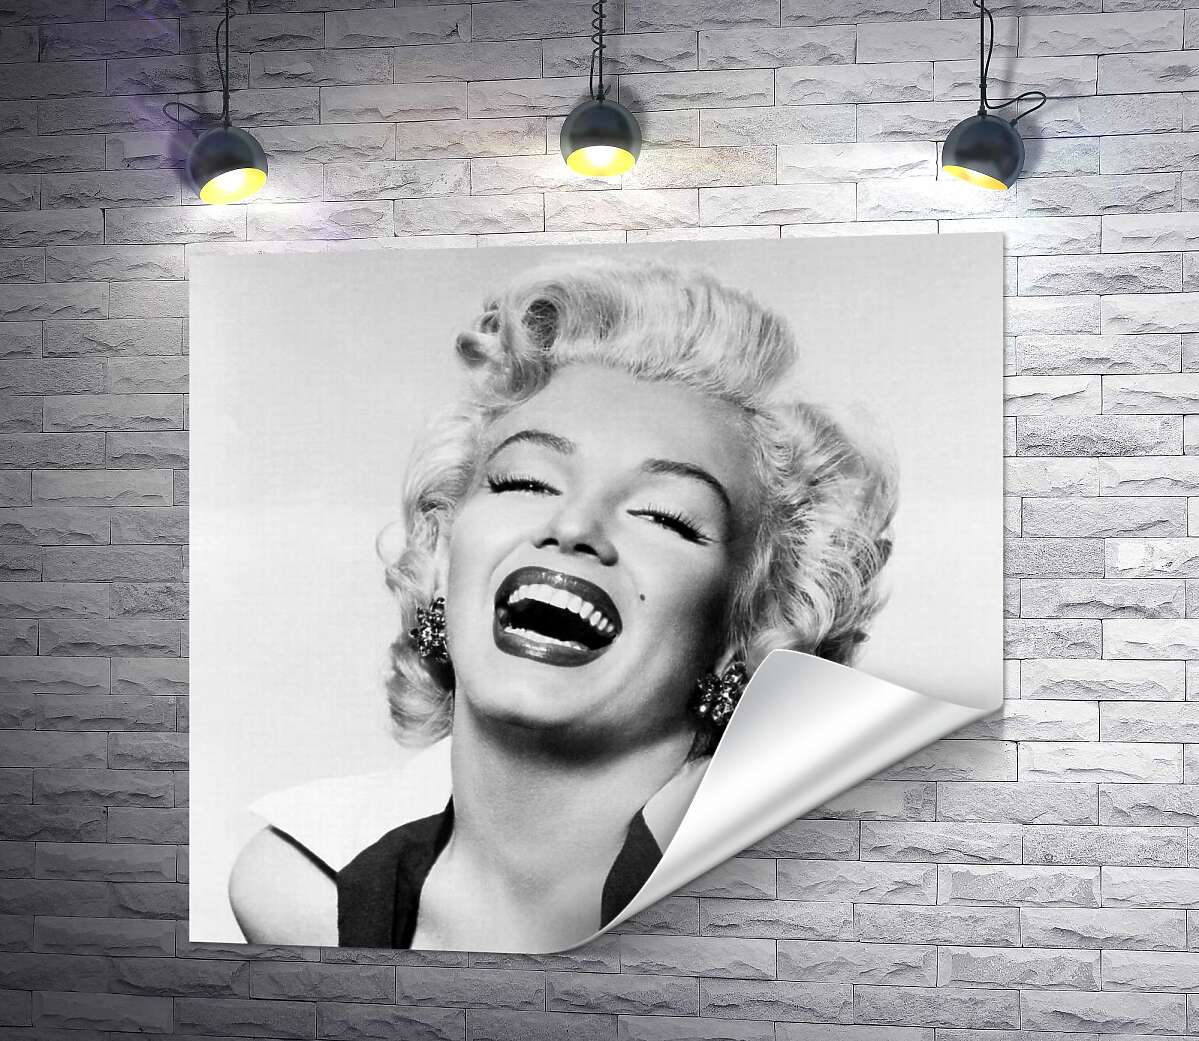 друк Легендарна посмішка Мерелін Монро (Marilyn Monroe)